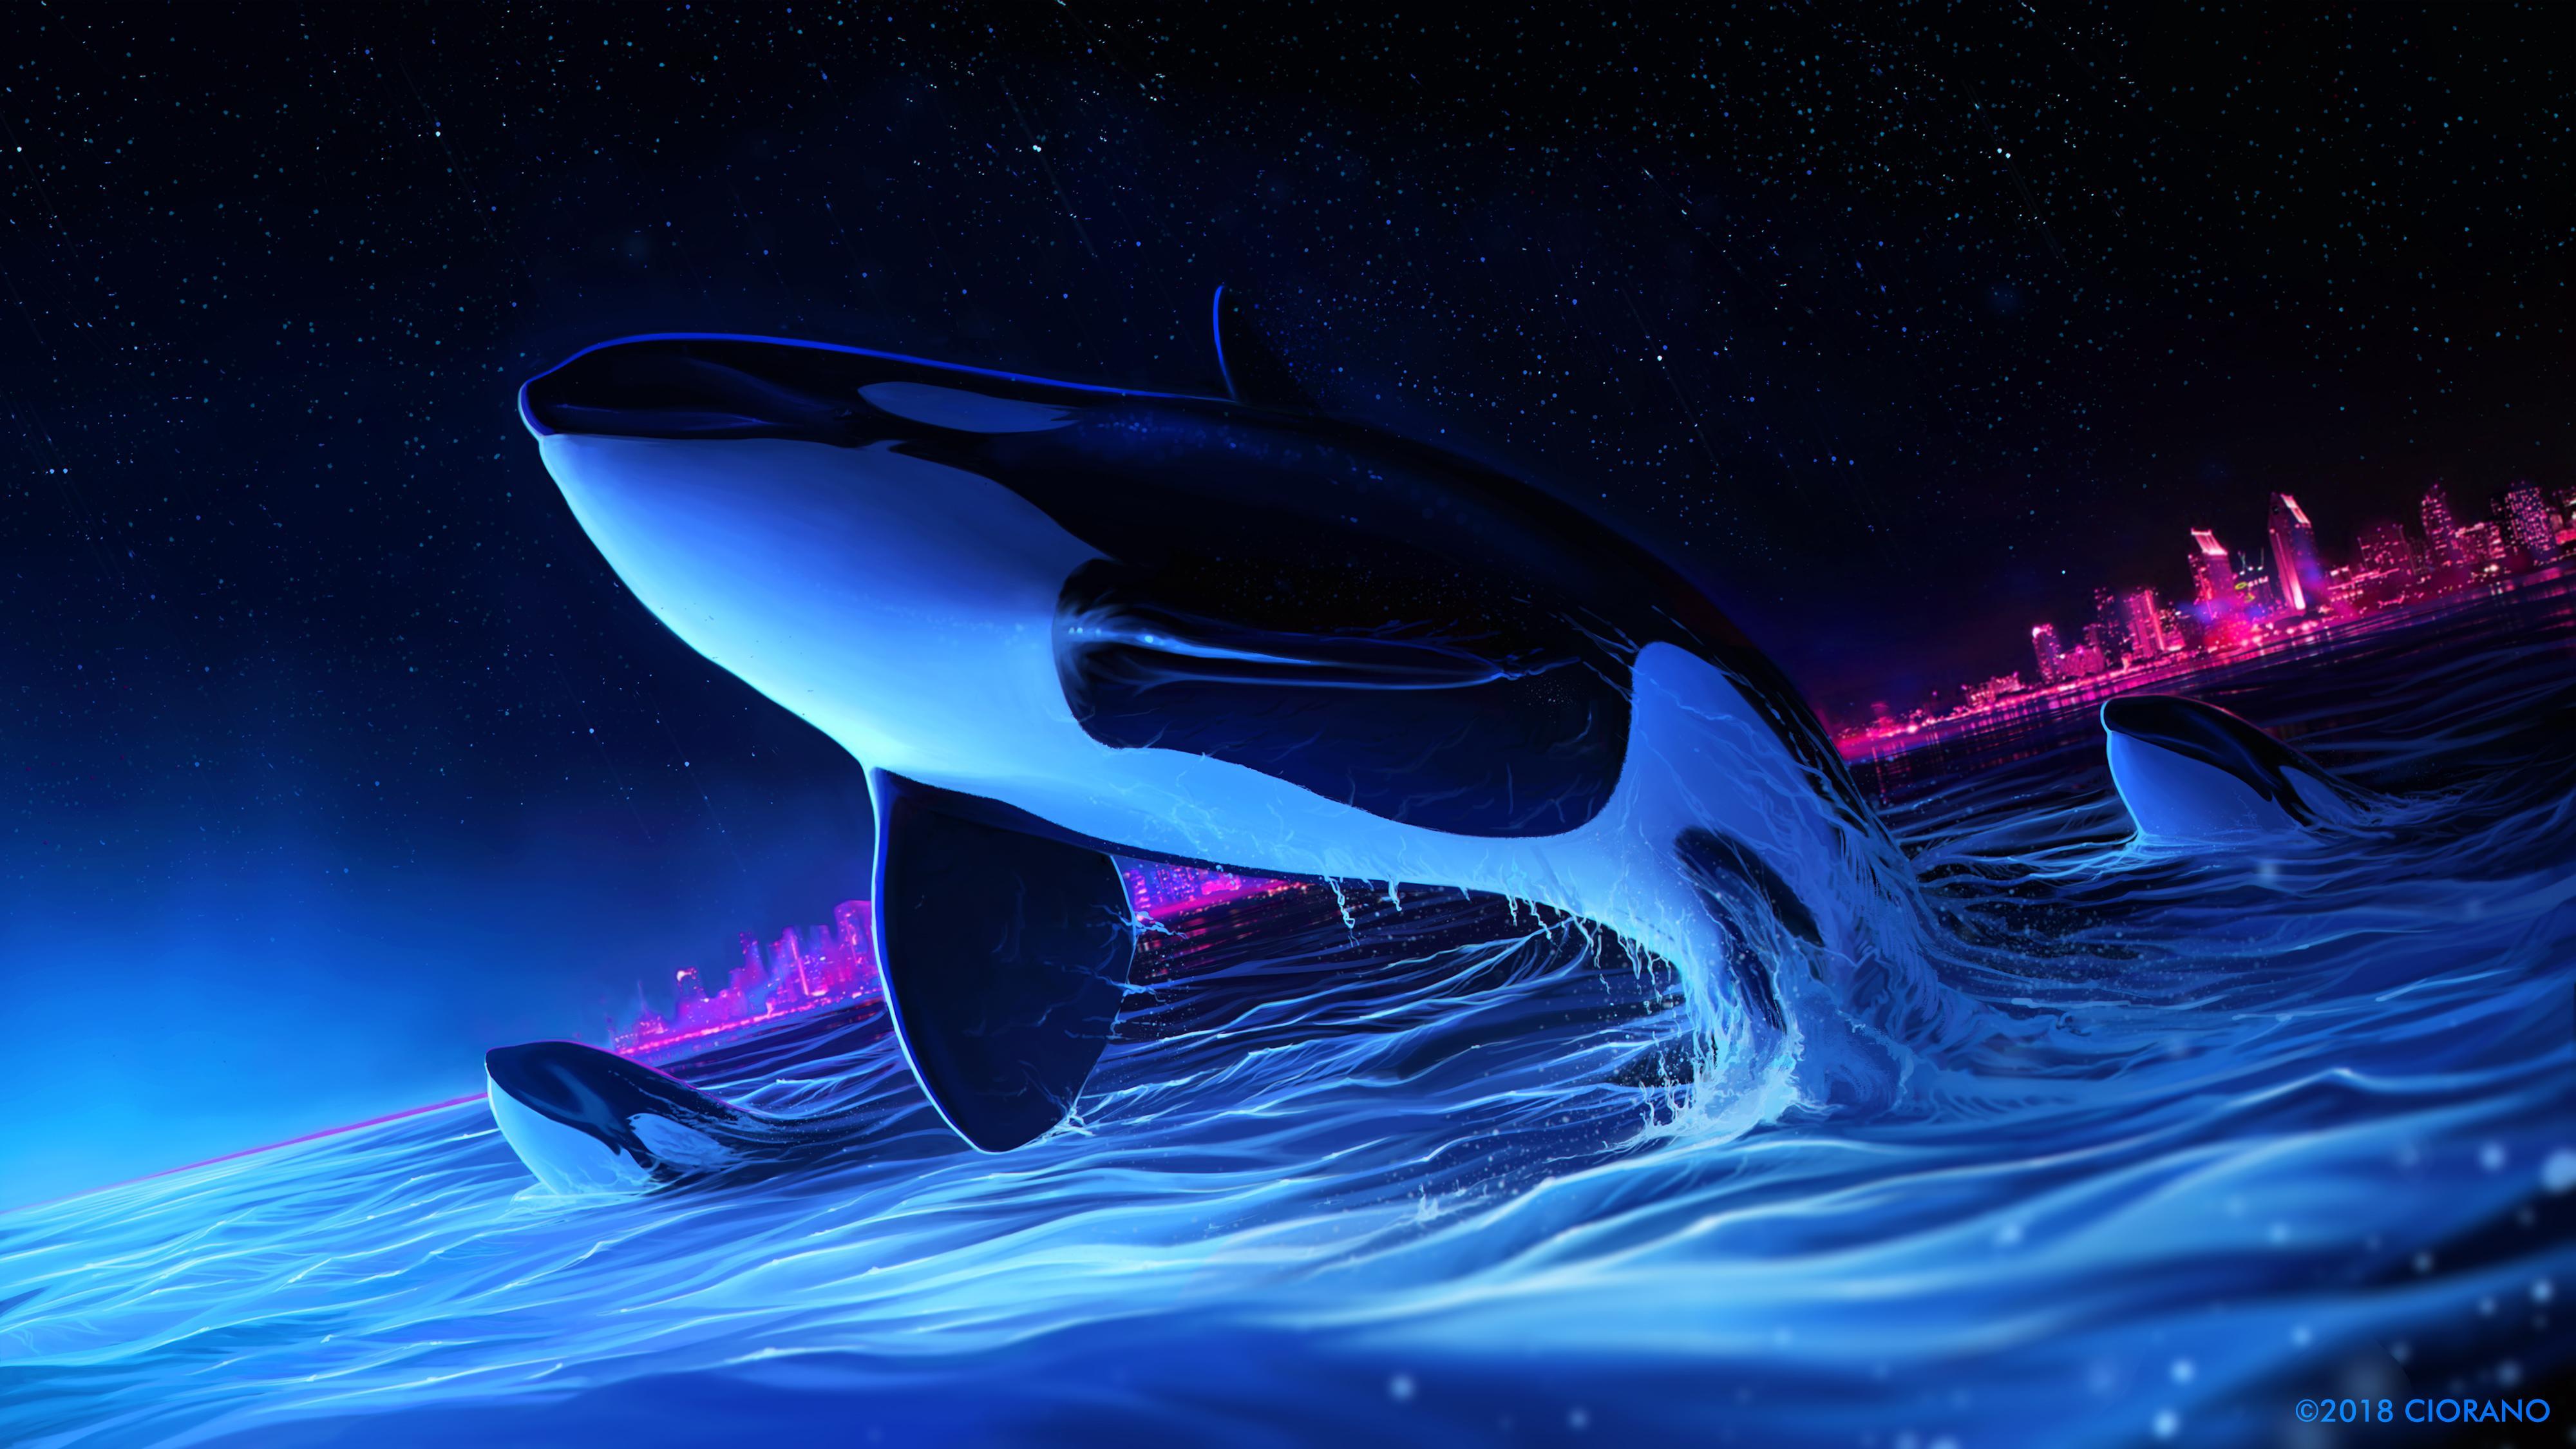 Dolphin Night Orca Whale Digital Art, HD Artist, 4k